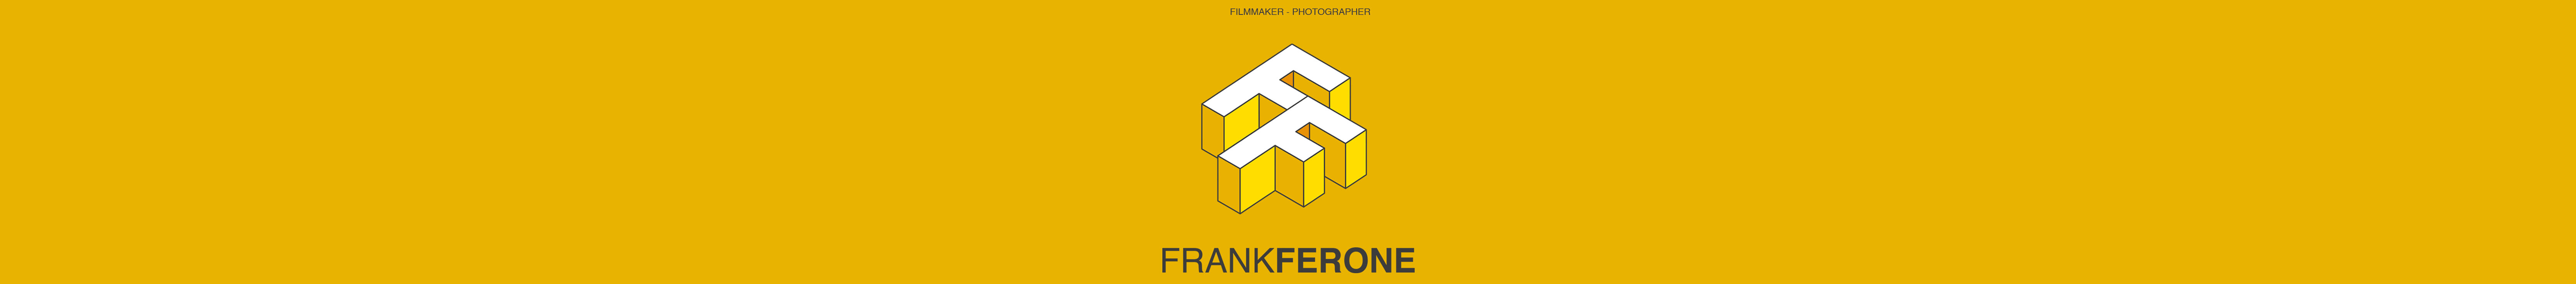 Francesco Ferone's profile banner